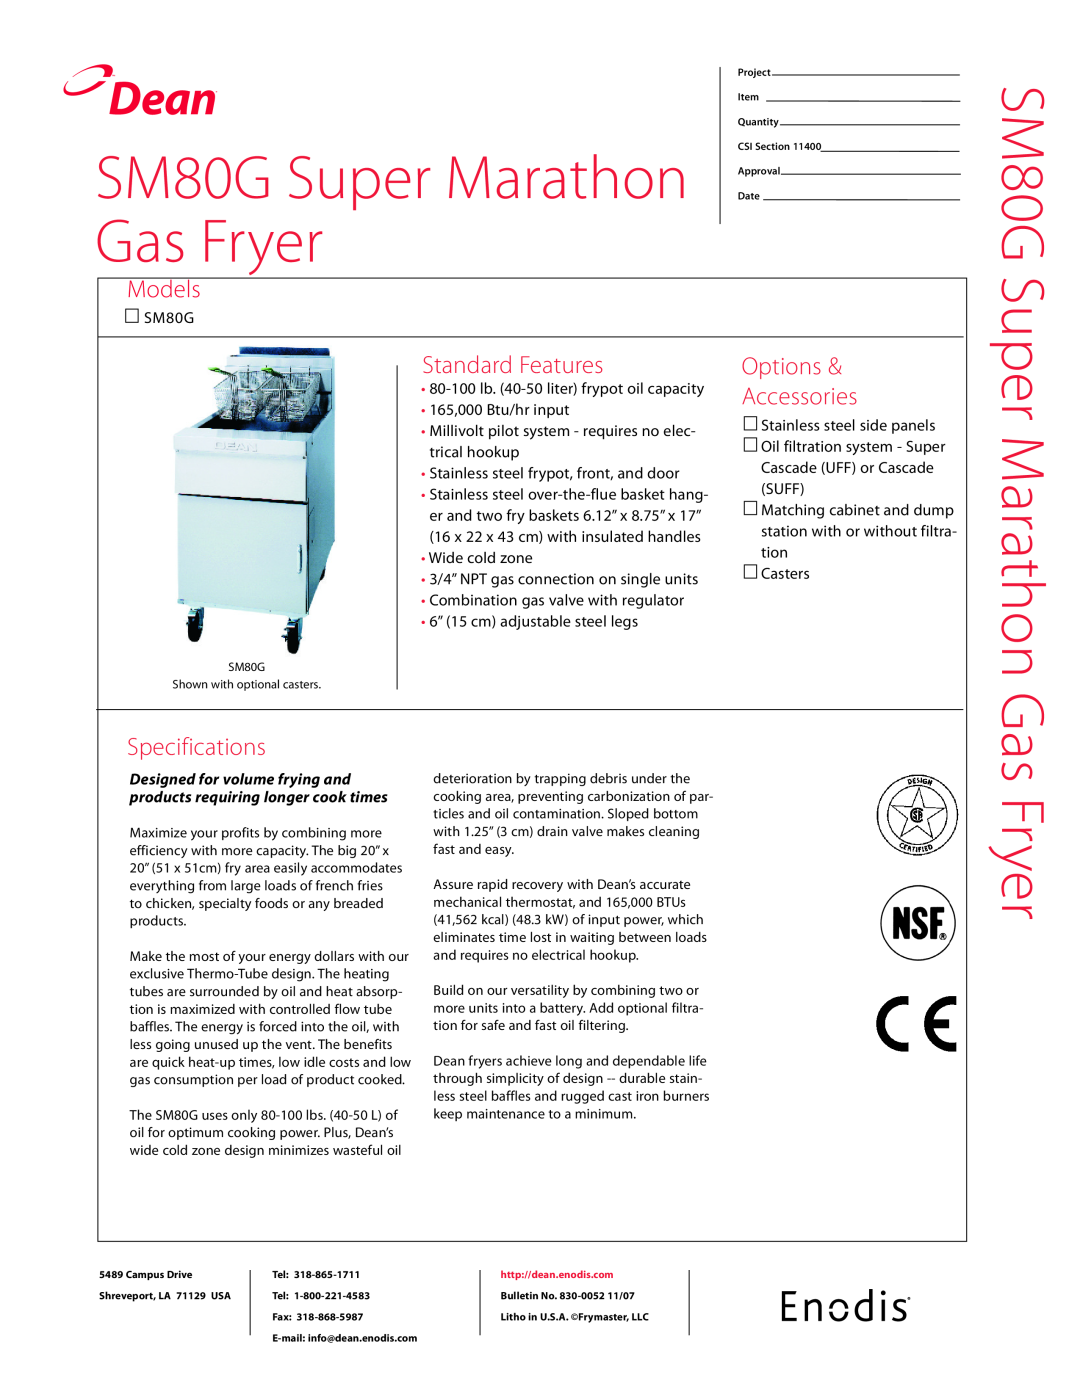 Teac specifications Dean, SM80G Super Marathon Gas Fryer, Models, Standard Features, Options & Accessories 